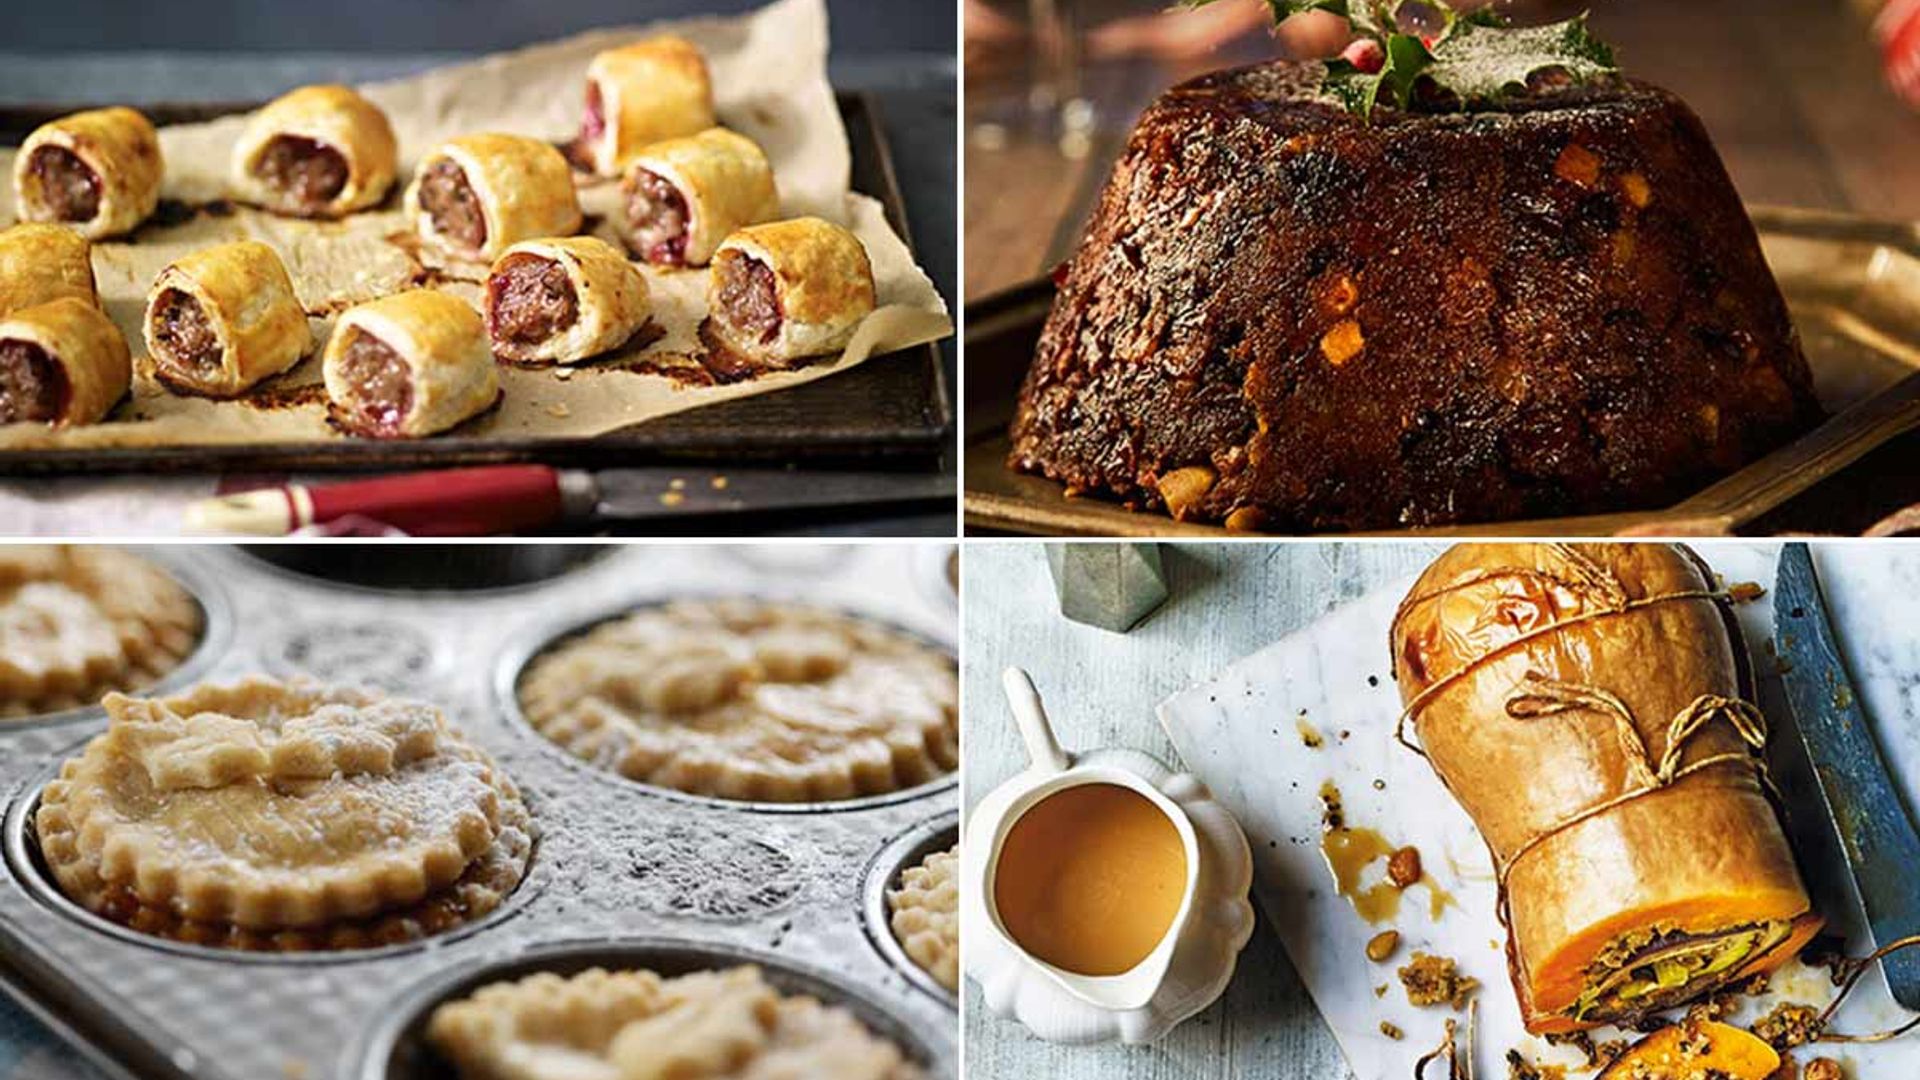 8 tasty Christmas recipes: gluten-free, dairy-free and vegetarian alternatives